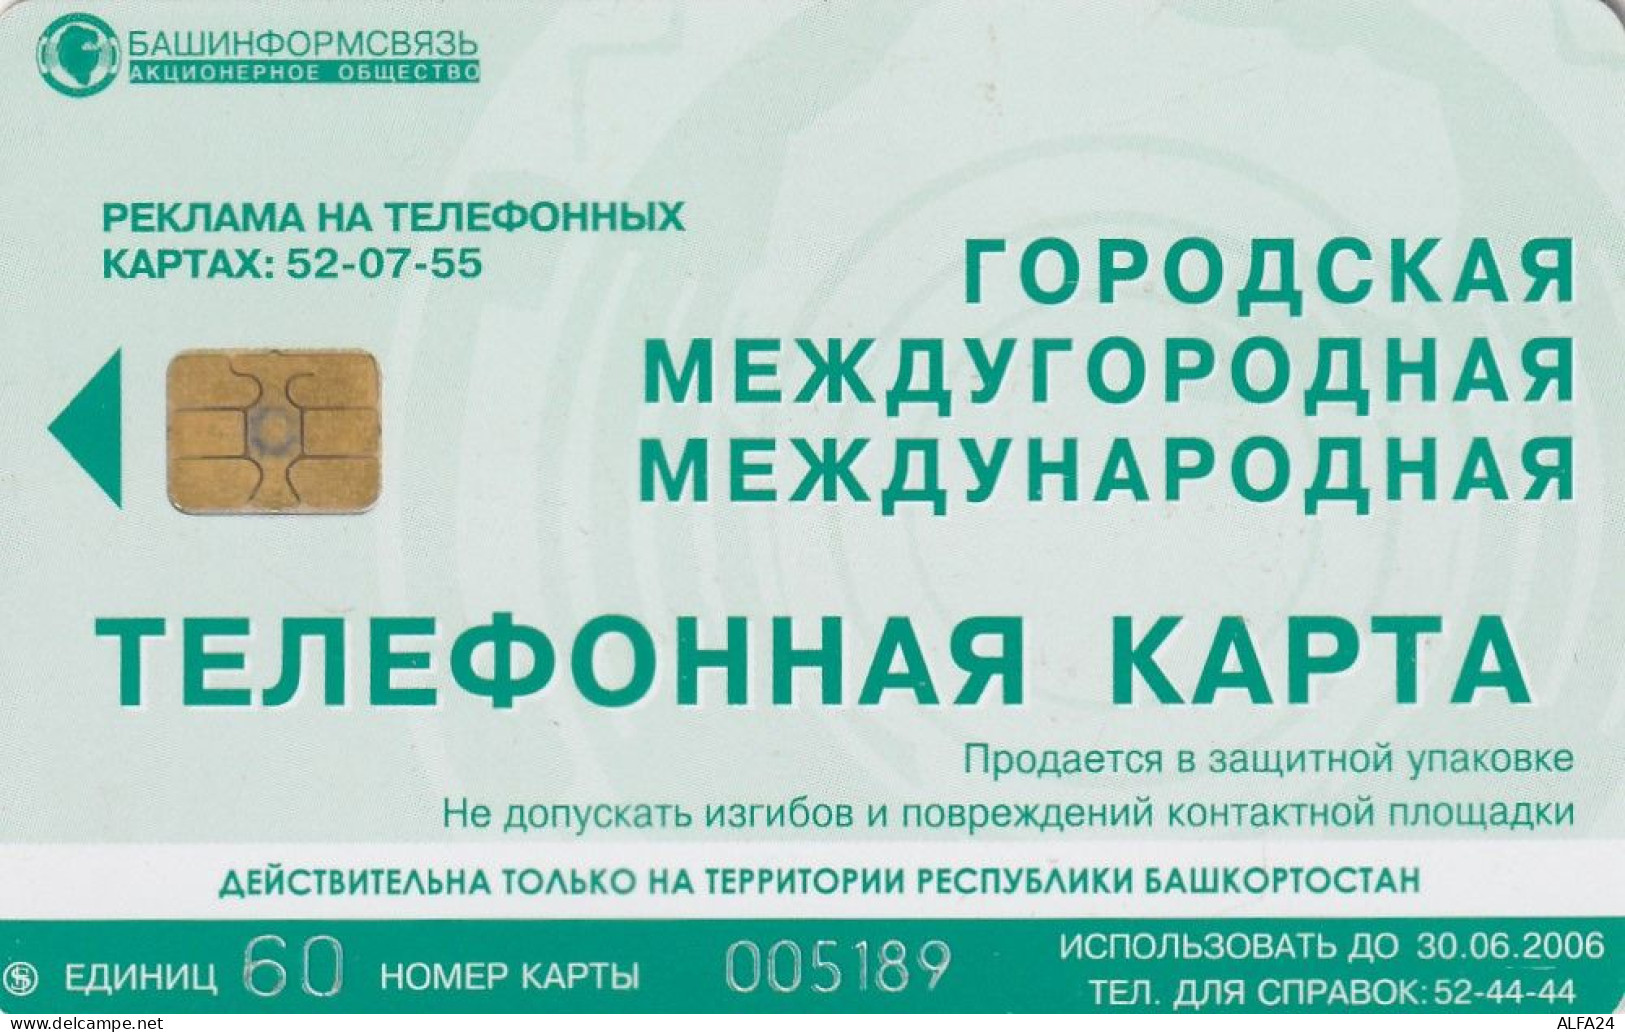 PHONE CARD RUSSIA Bashinformsvyaz - Ufa (E10.4.4 - Rusland